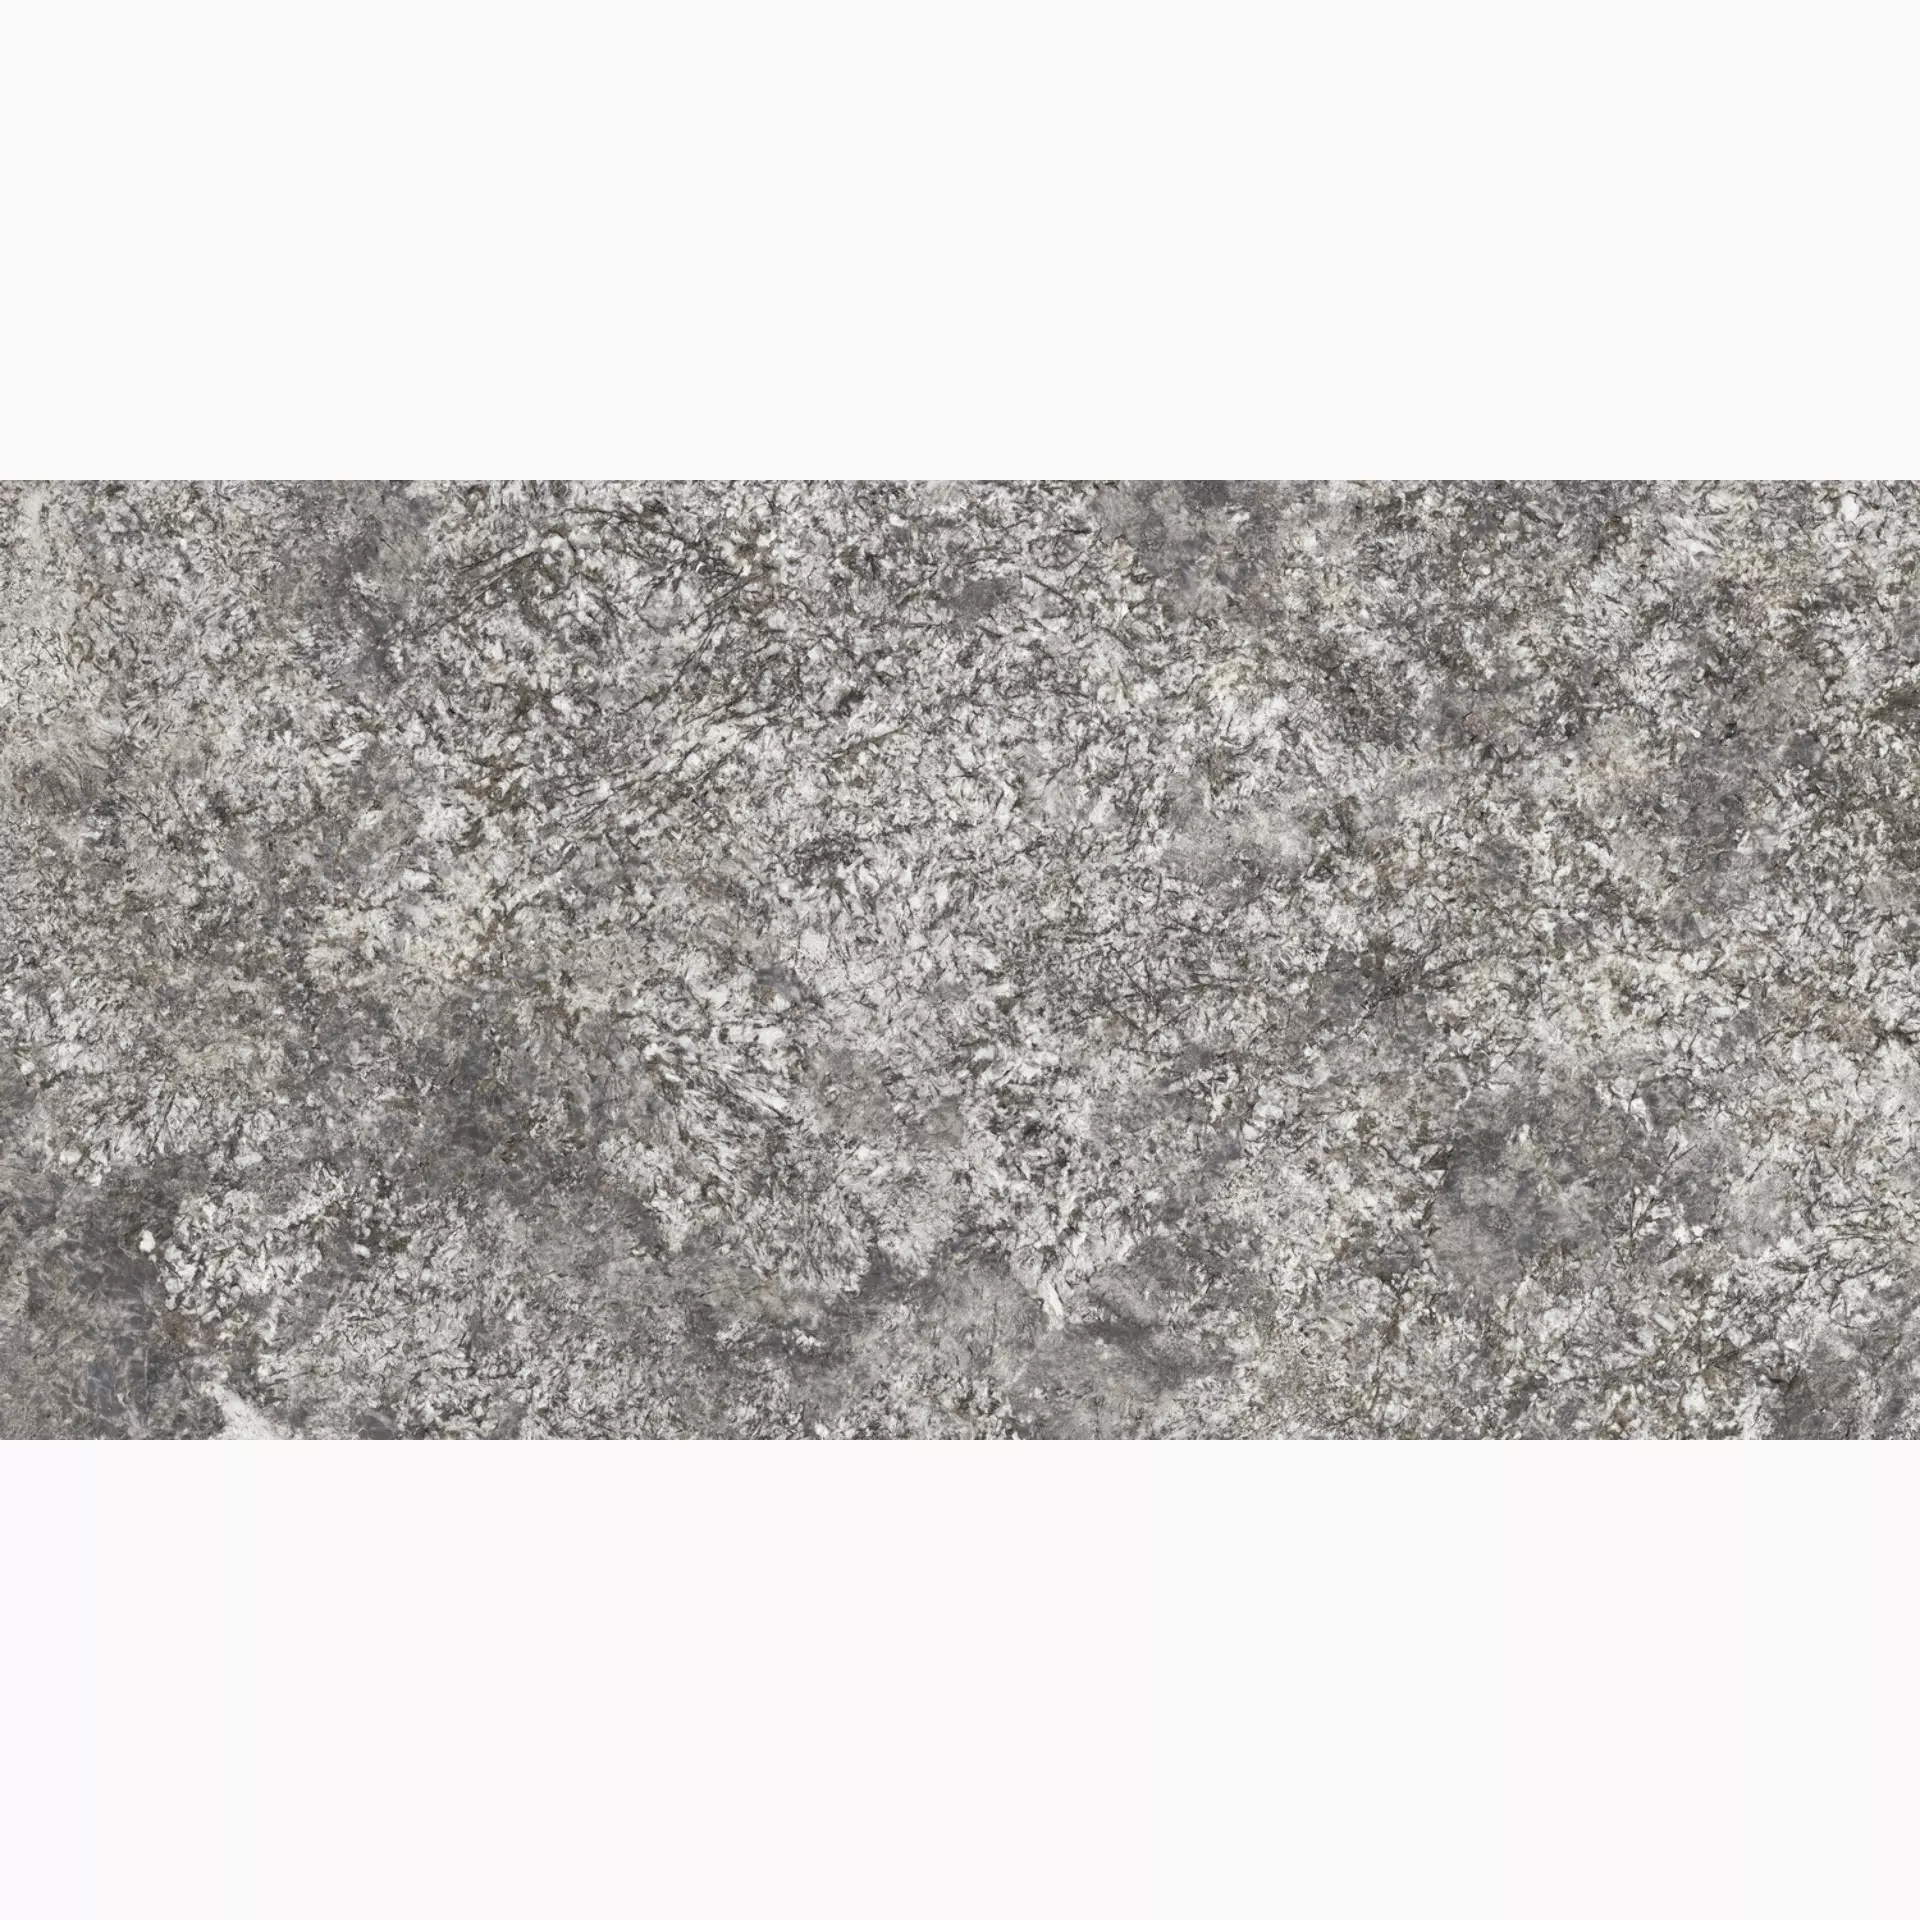 Maxfine Graniti Celeste Aran Prelucidato P175601MF6 75x150cm rectified 6mm